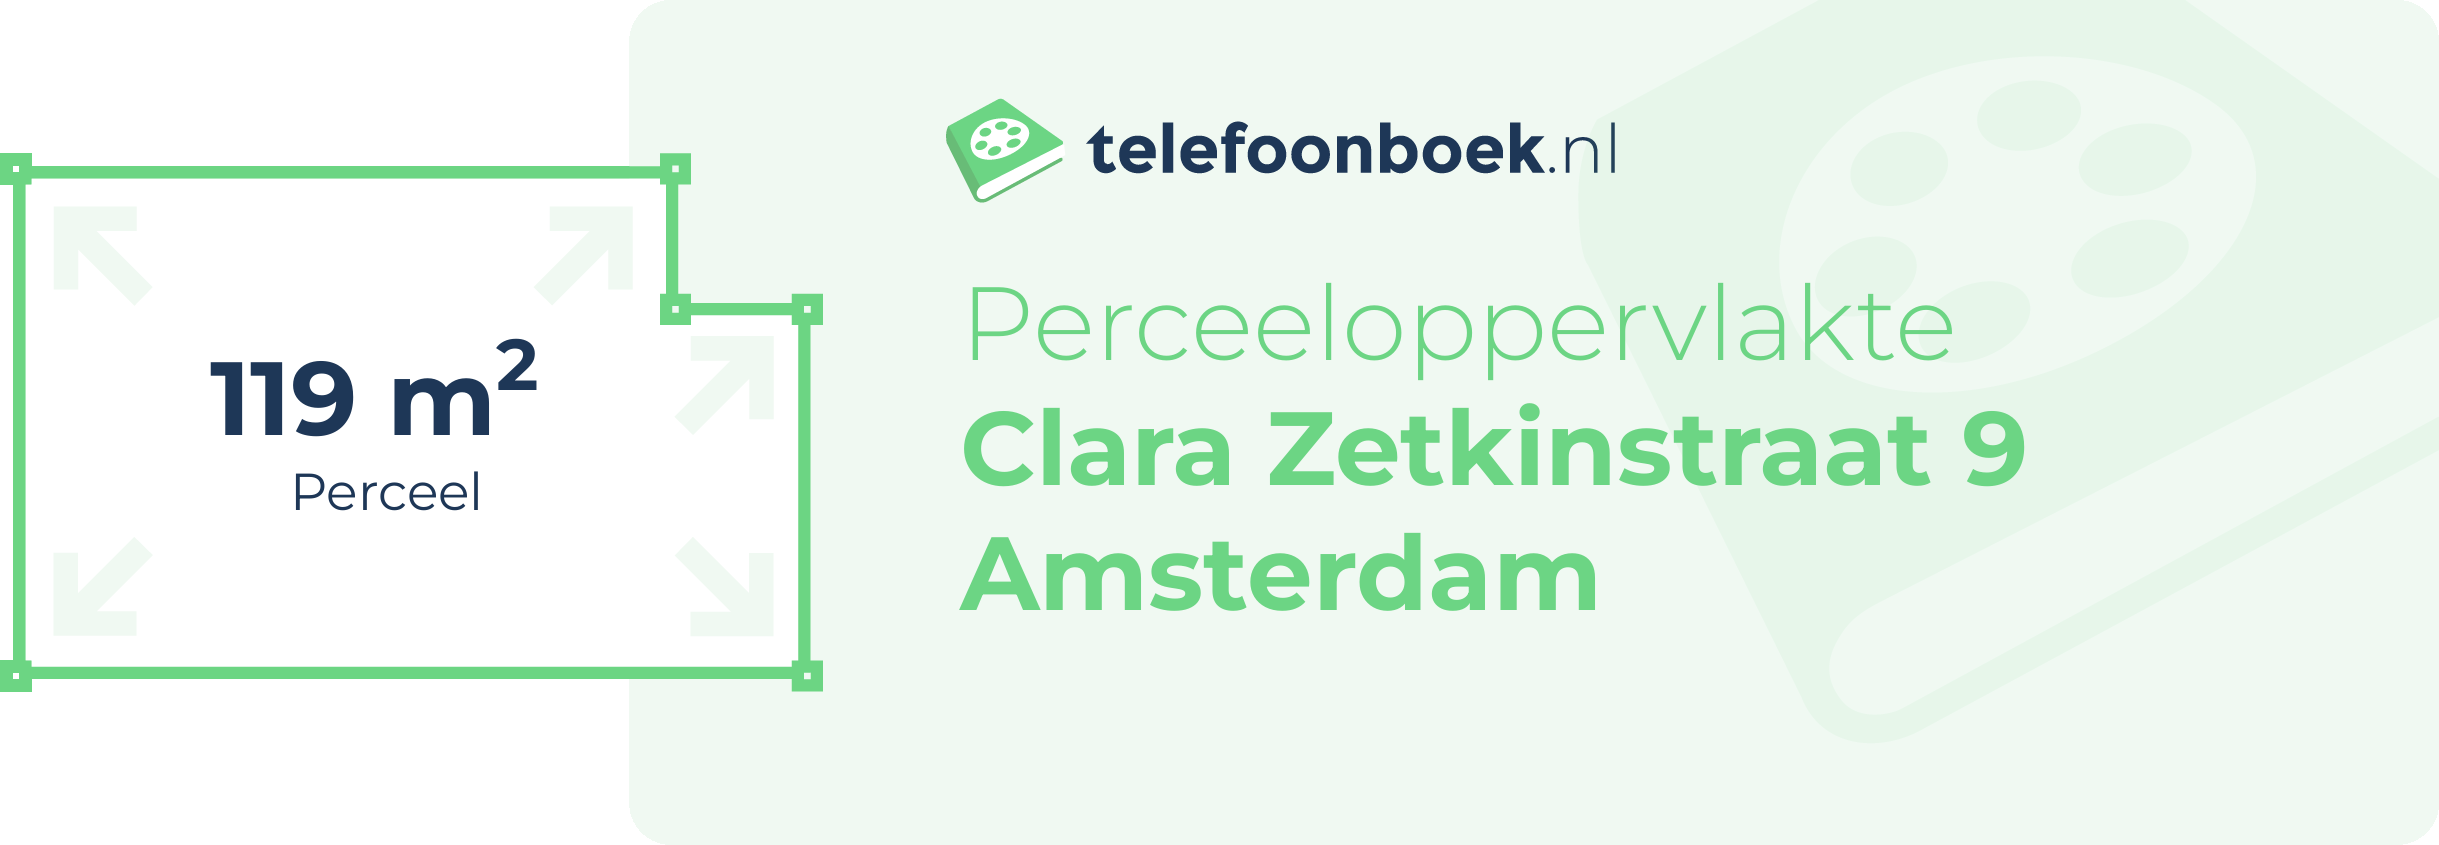 Perceeloppervlakte Clara Zetkinstraat 9 Amsterdam